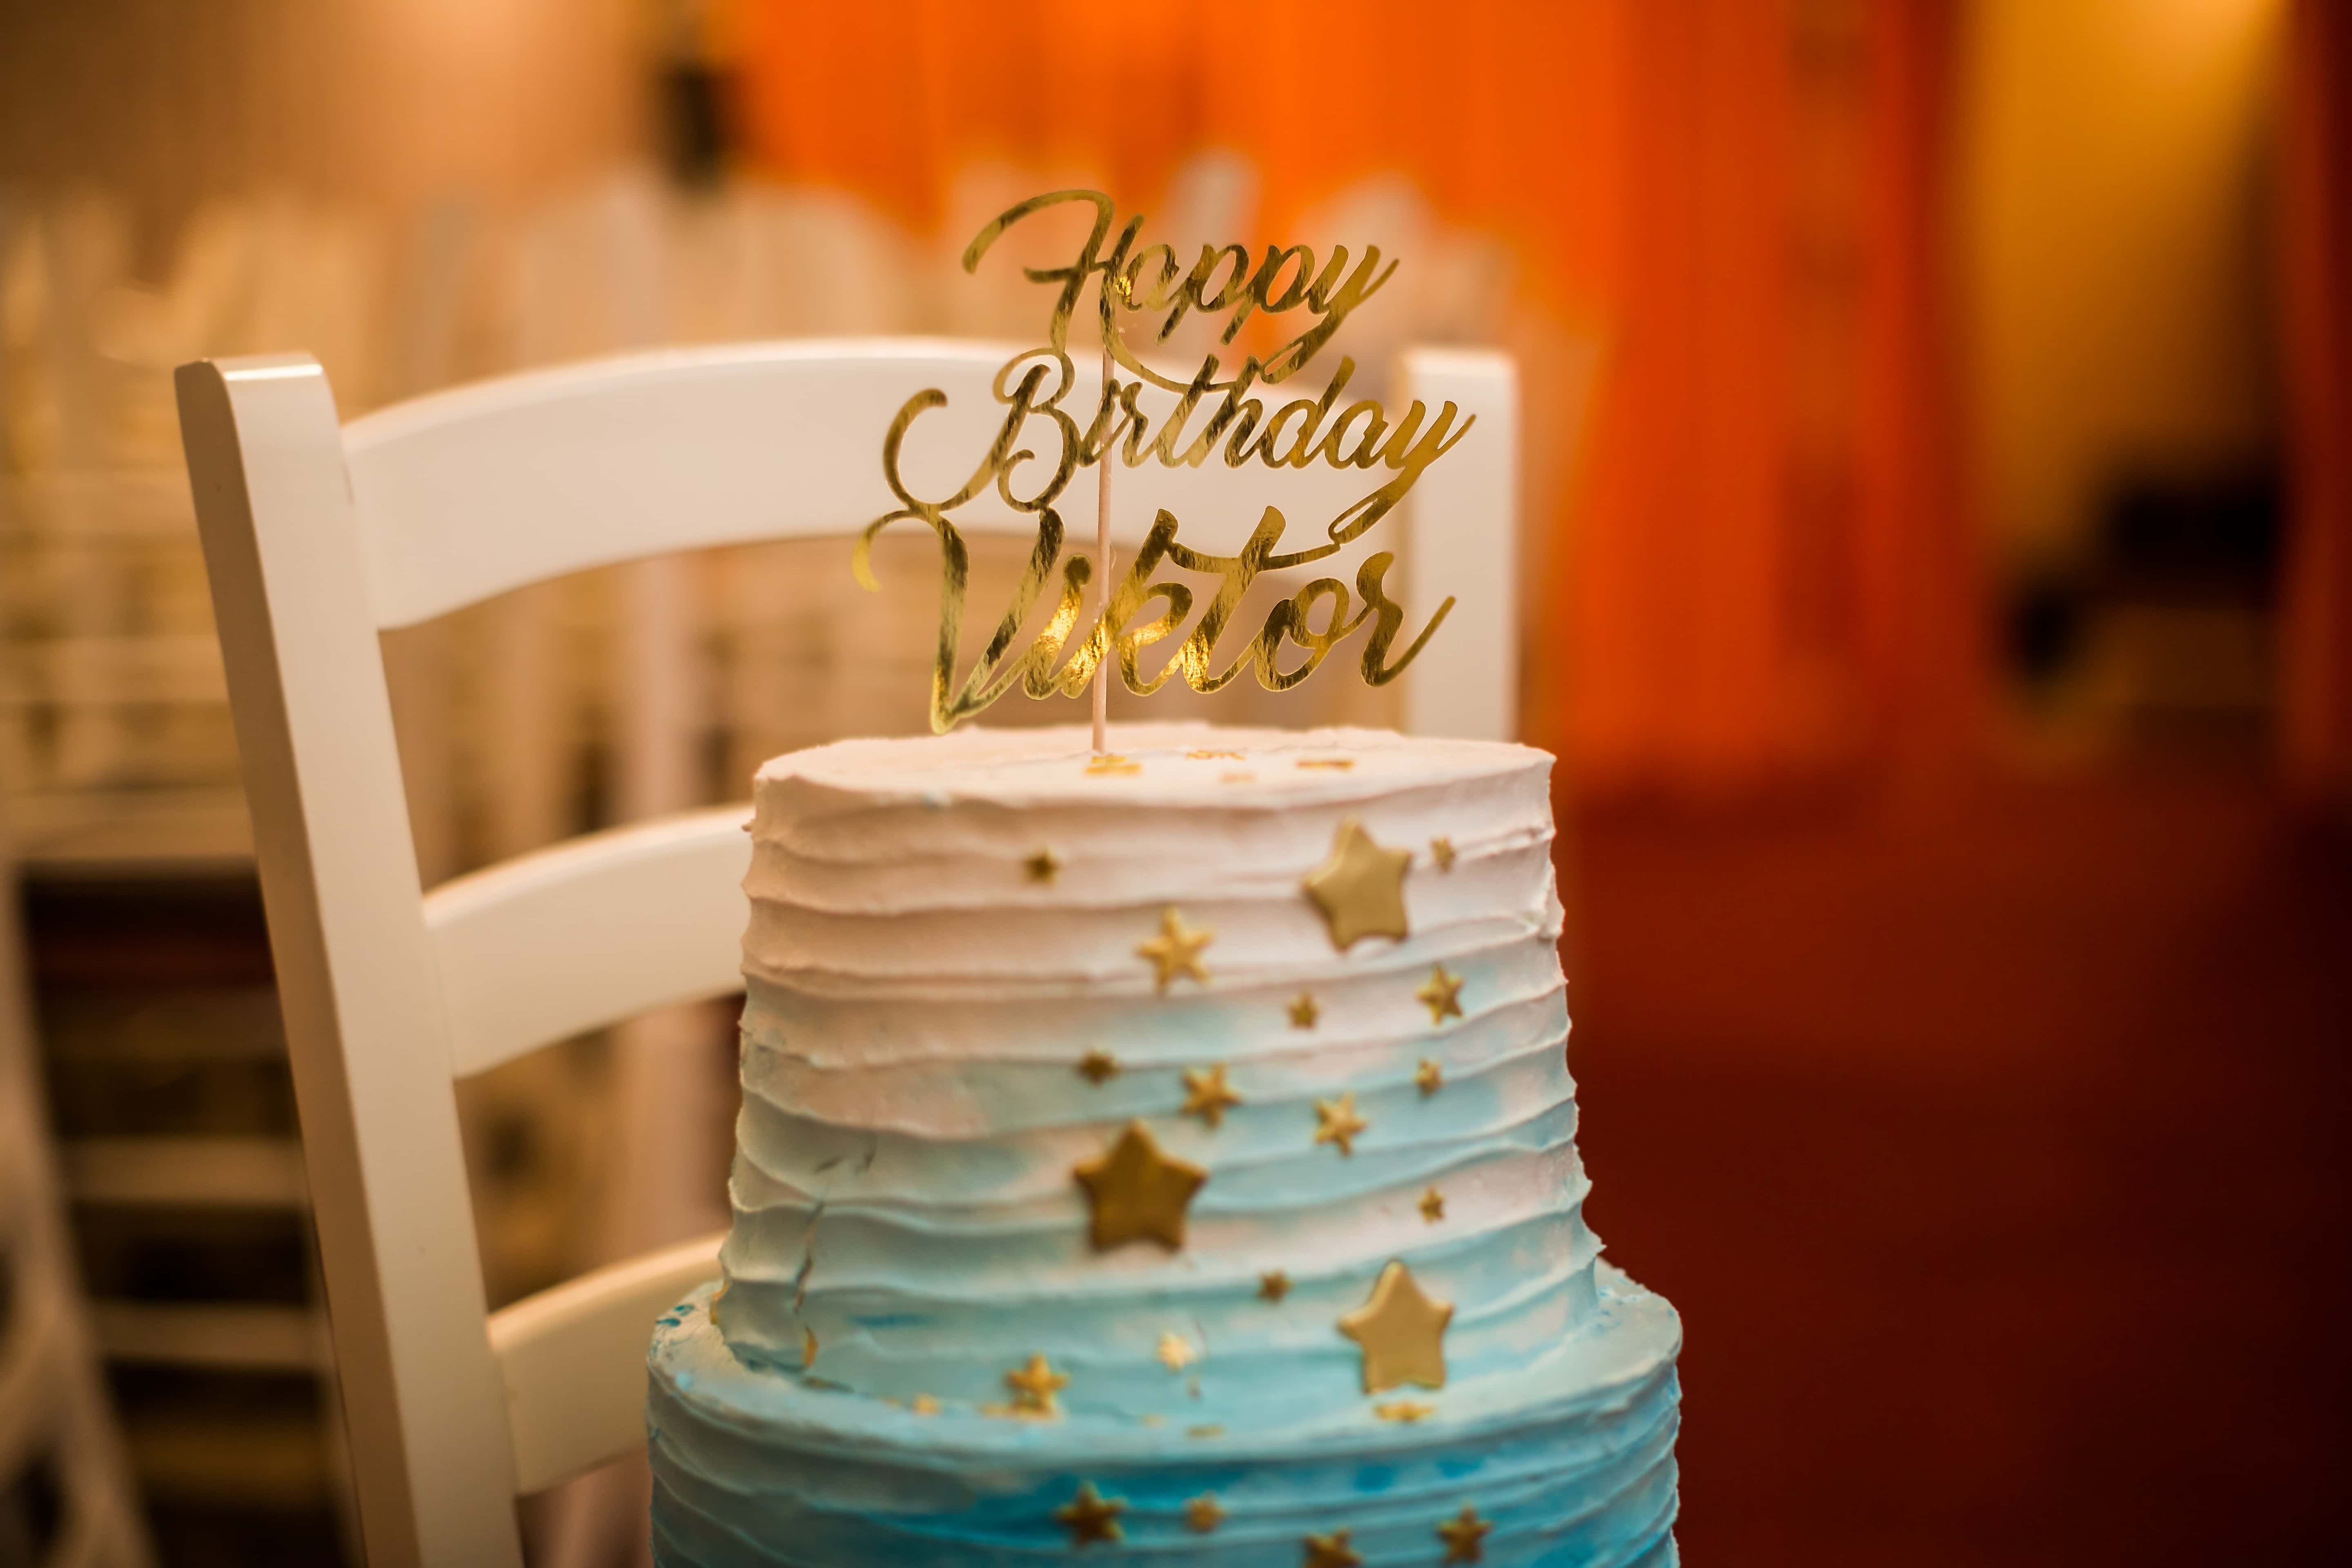 Free Picture Happy Birthday Birthday Cake Golden Glow Decoration Cream Elegant Chocolate Baking Delicious